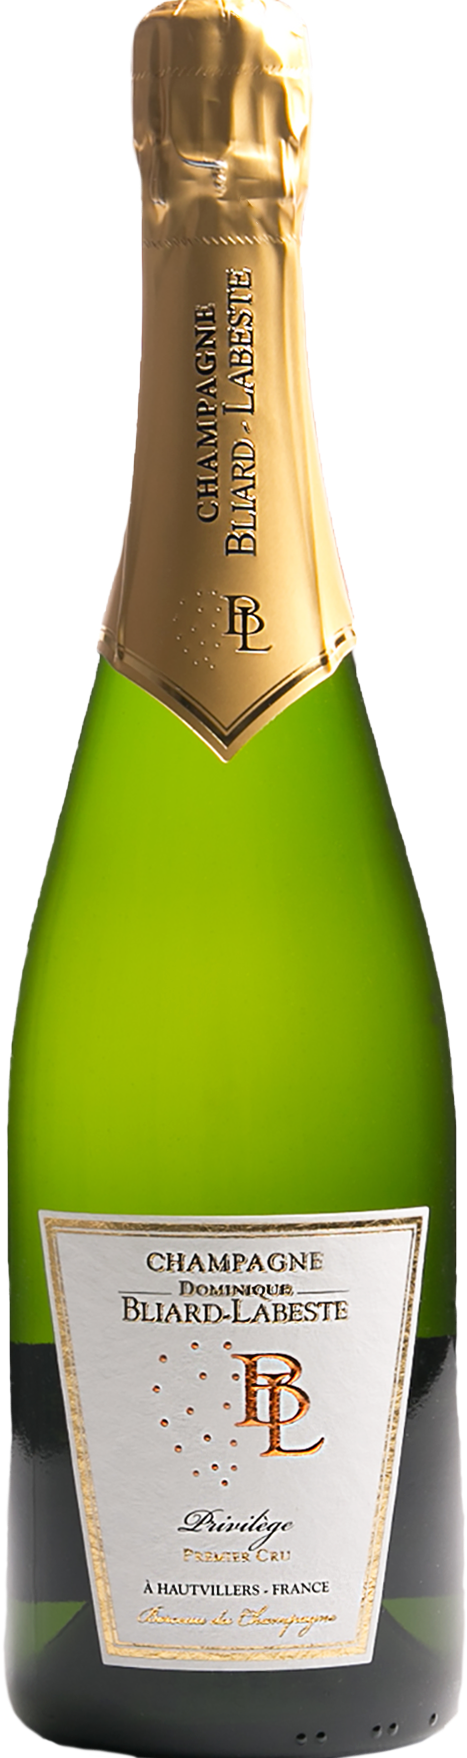 Champagne Bliard-Labeste Premier Cru, Privilège Brut